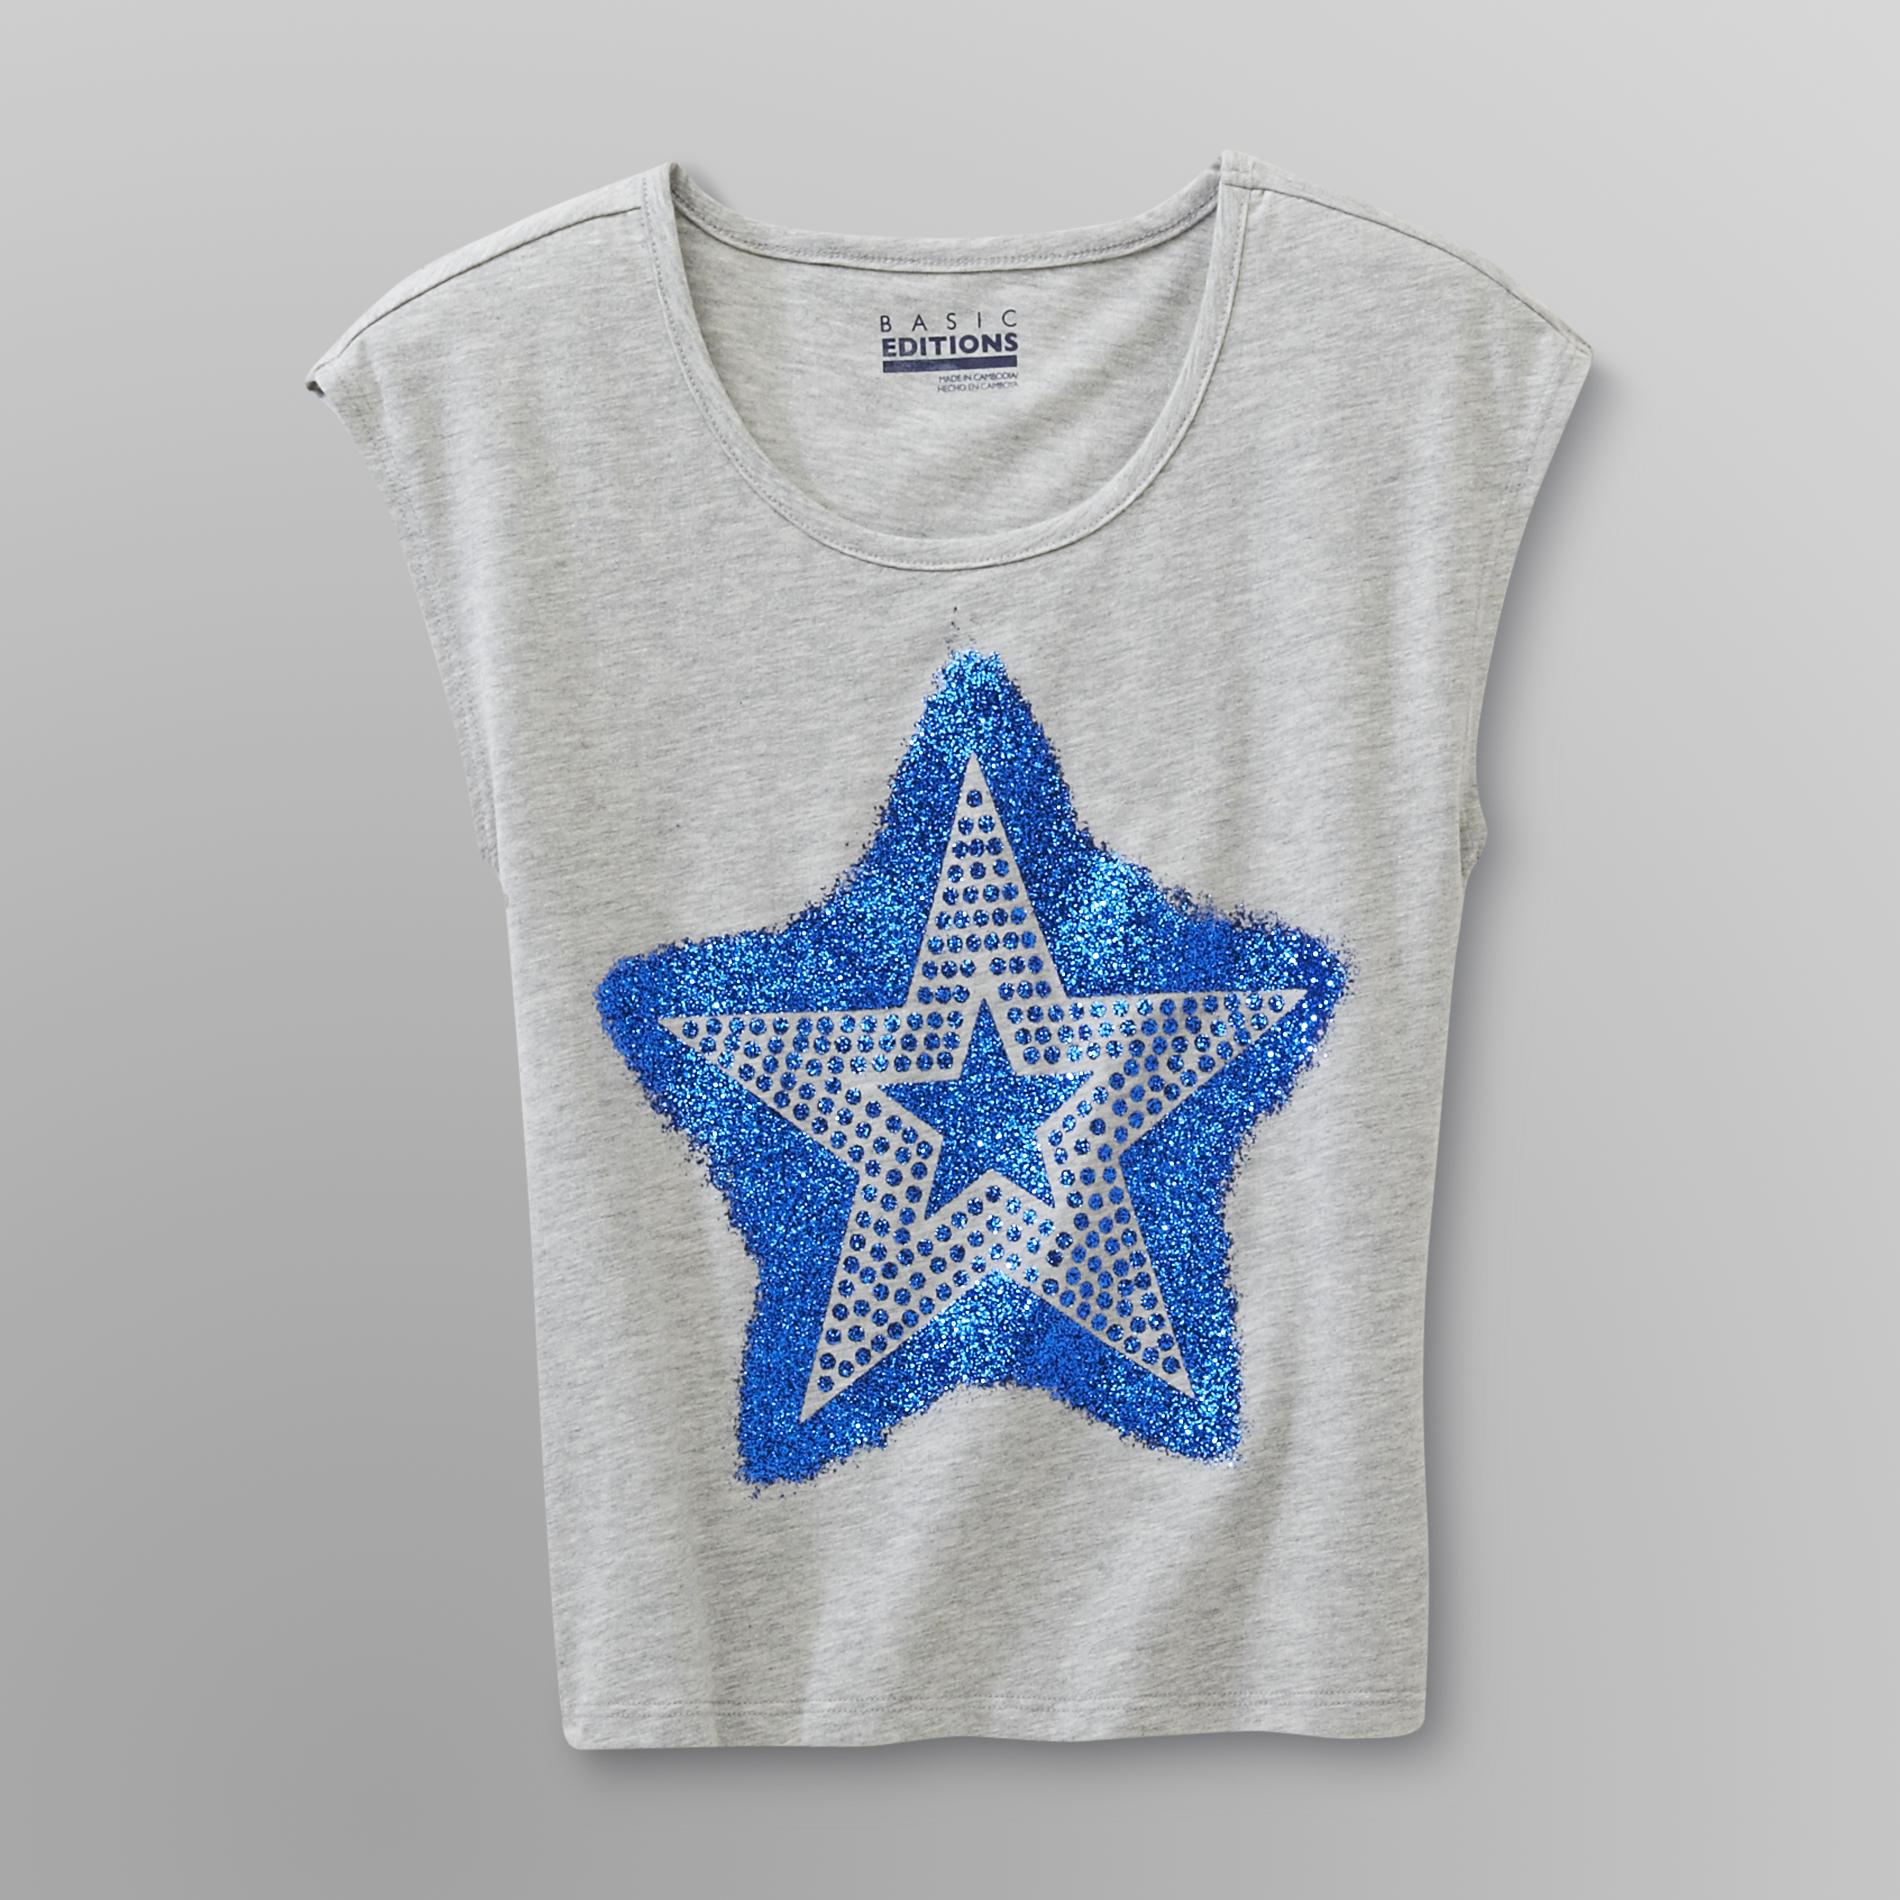 Basic Editions Girl's Sleeveless Graphic T-Shirt - Star